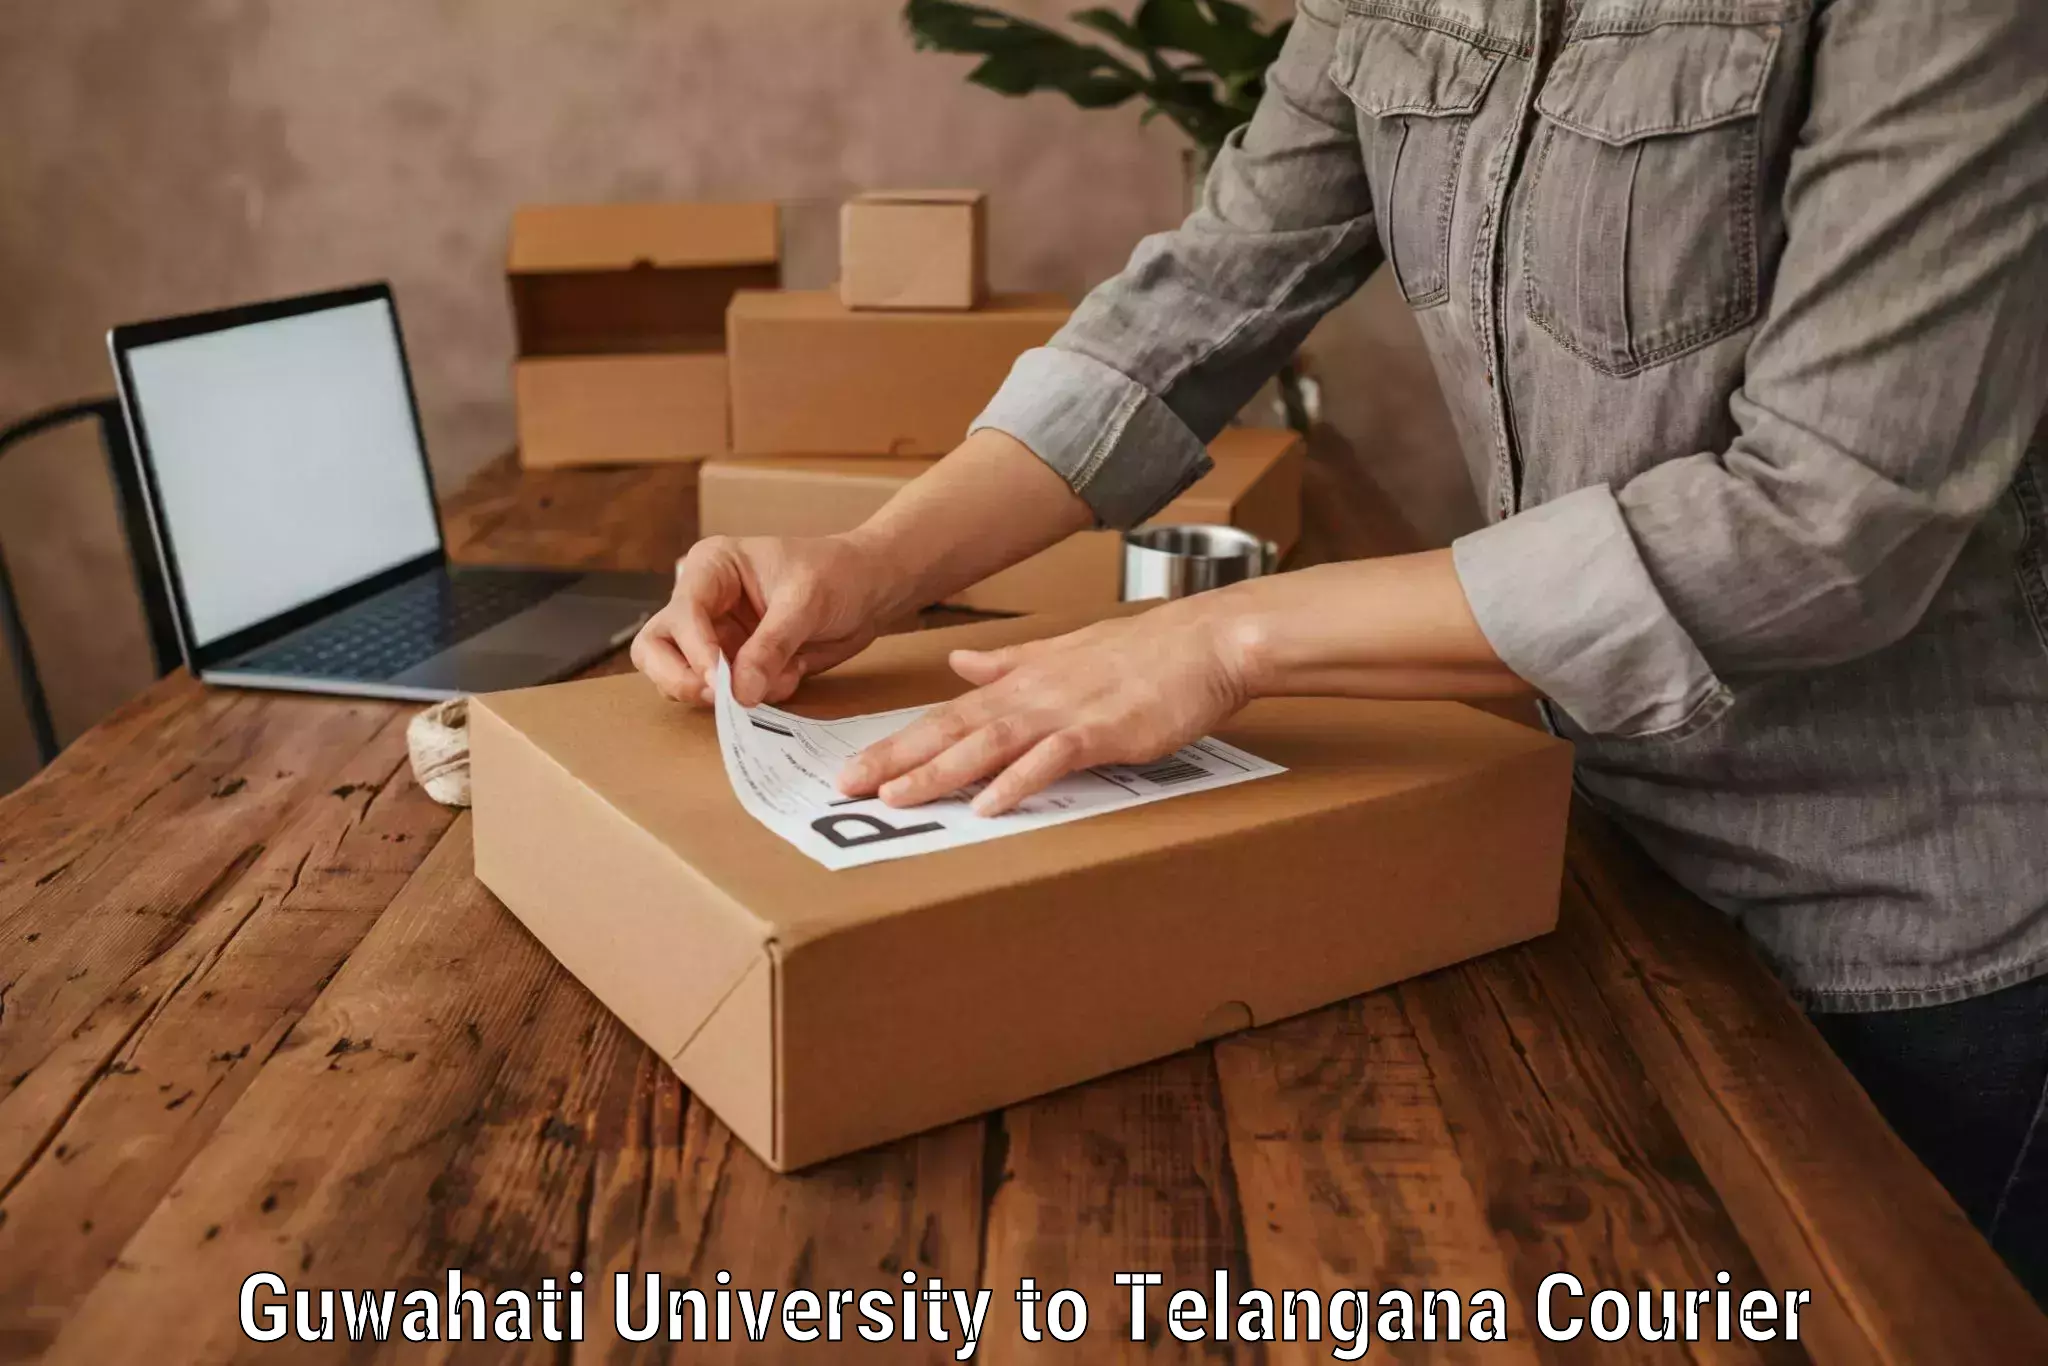 Baggage shipping service Guwahati University to IIT Hyderabad